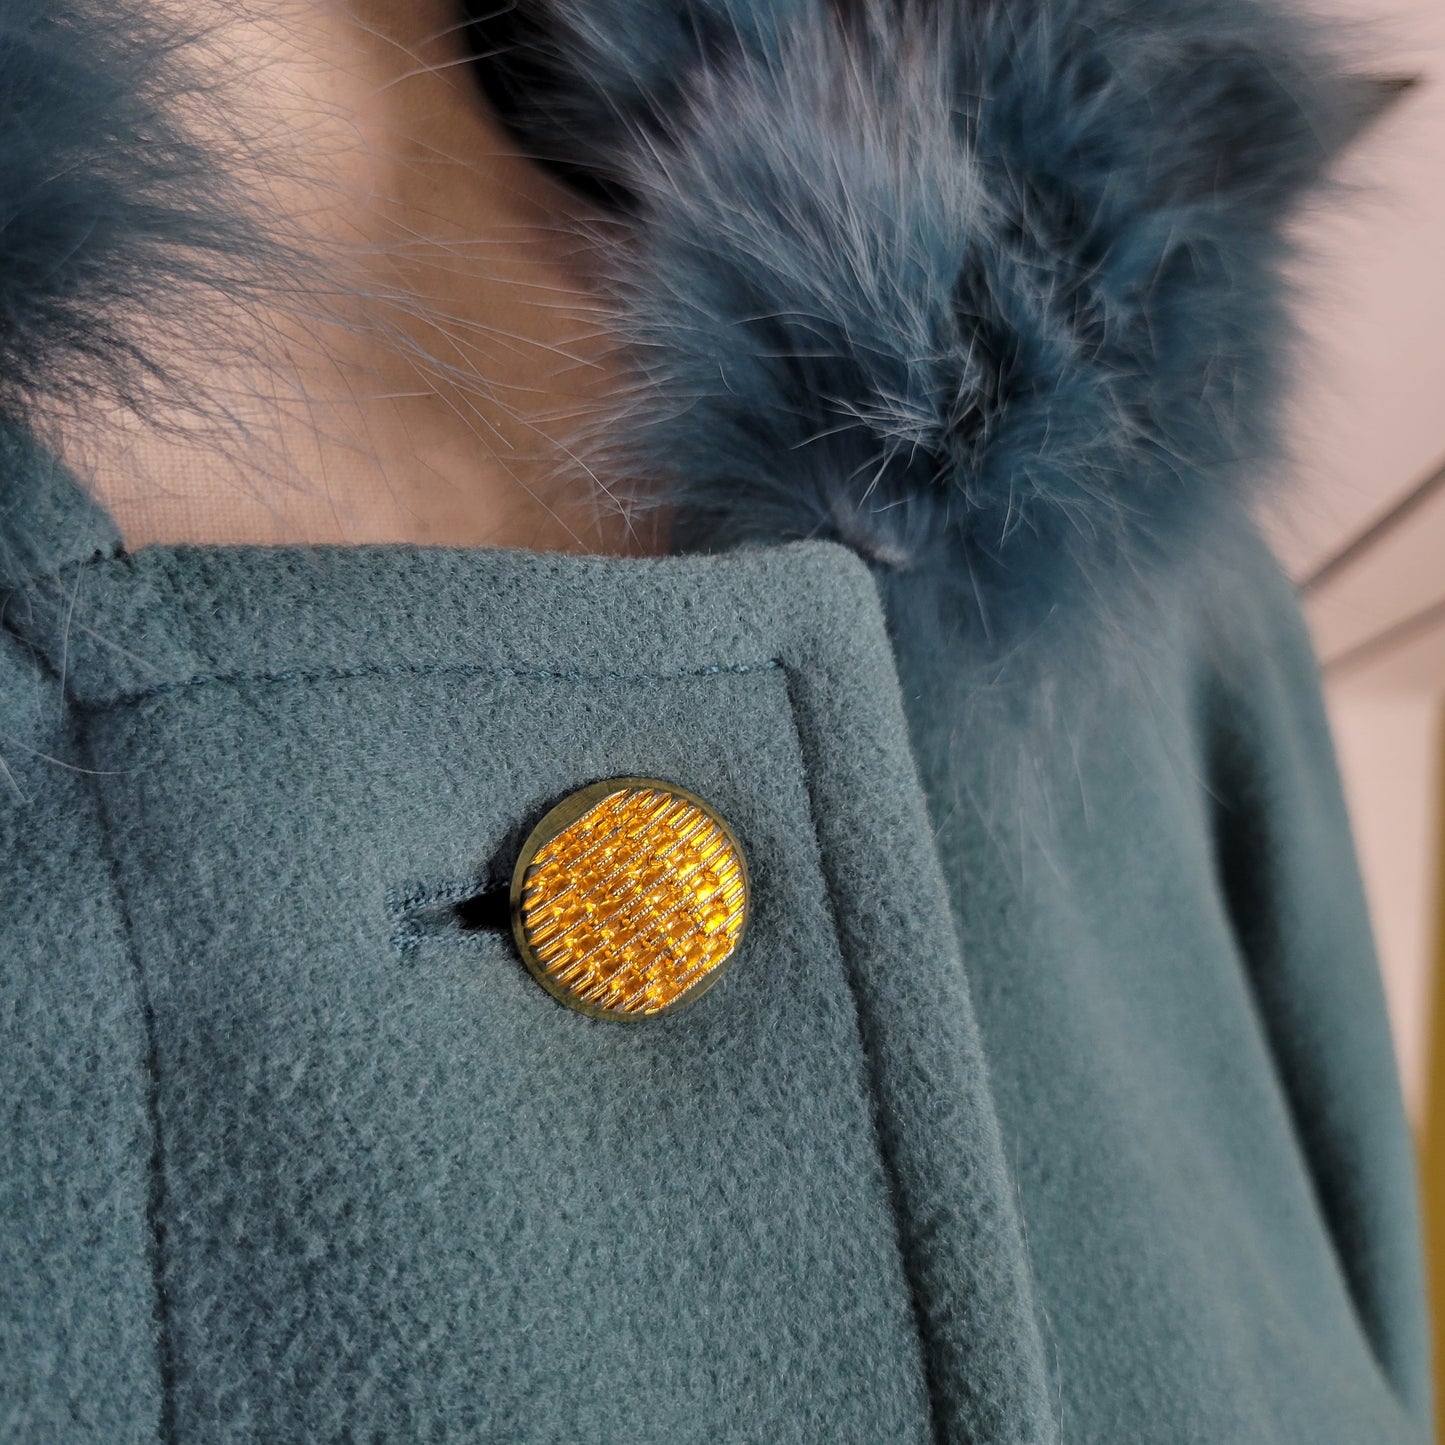 C&A Vintage Dusty Blue Wool Coat with Blue Faux Fur Hood - size EU 40